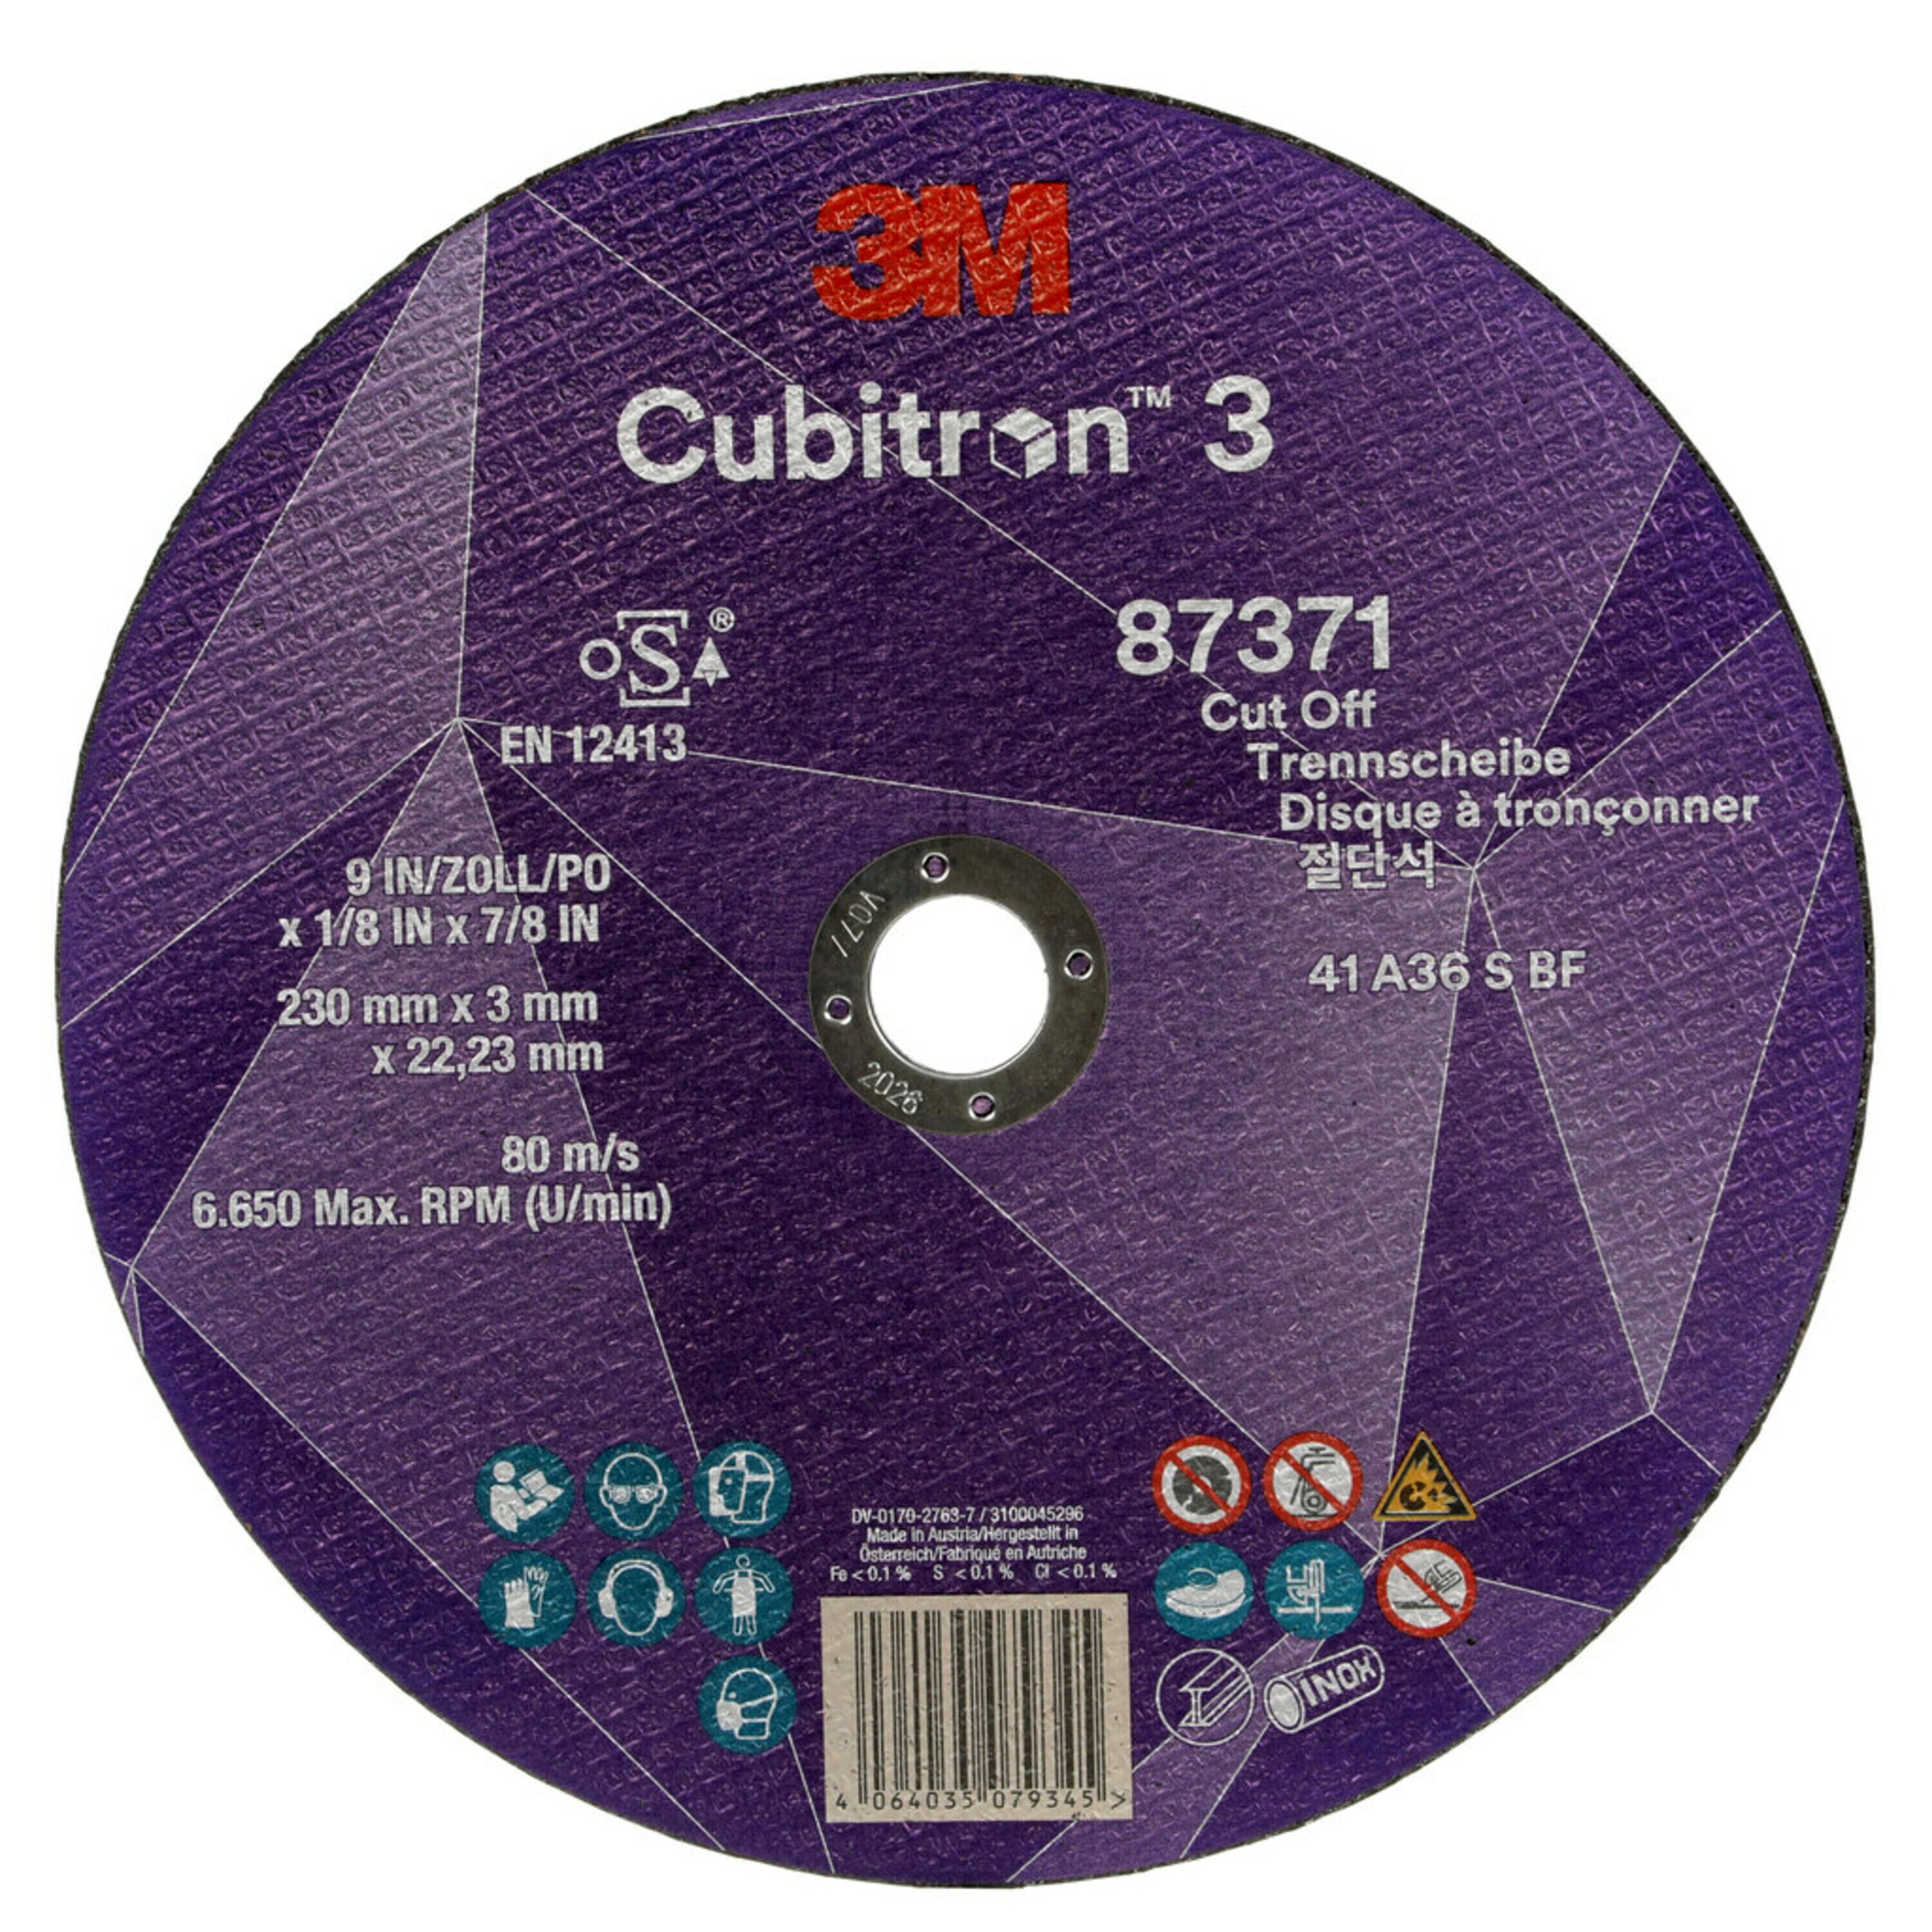 3M Cubitron 3 cut-off wheel, 230 mm, 3 mm, 22.23 mm, 36 , type 41 #87371